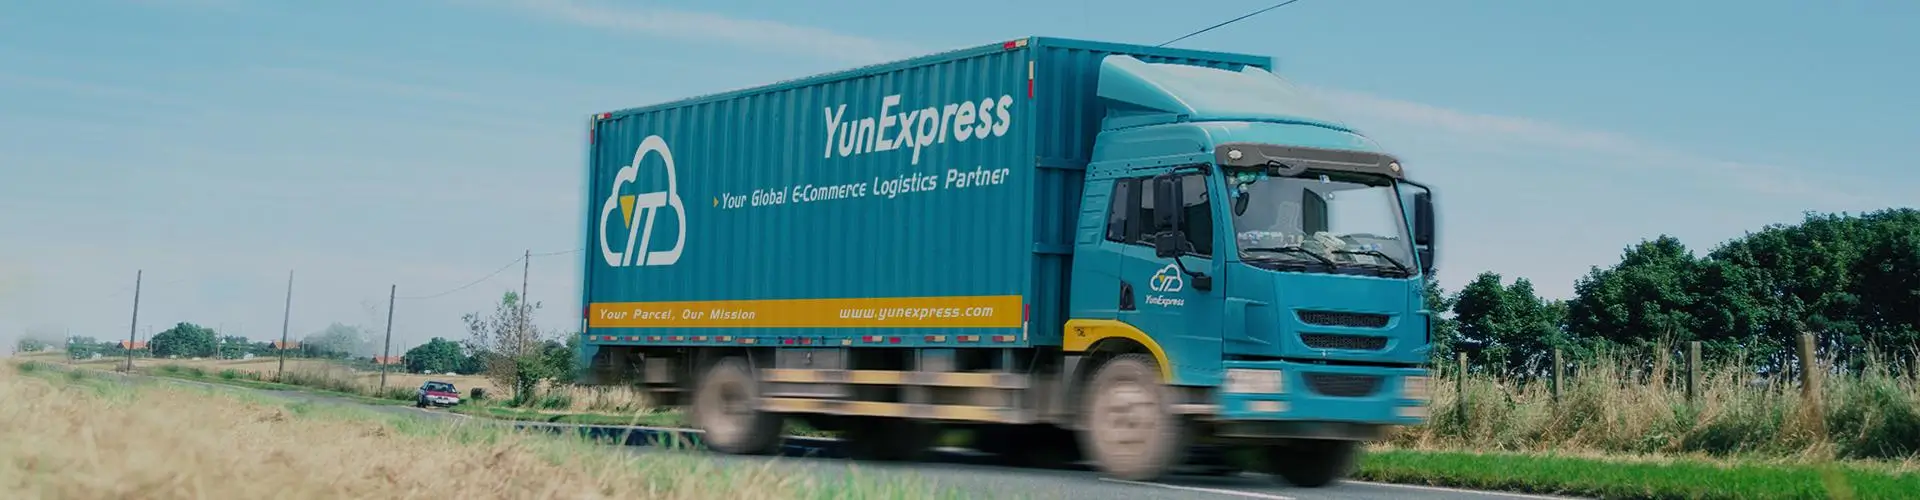 Yunexpress tracking car